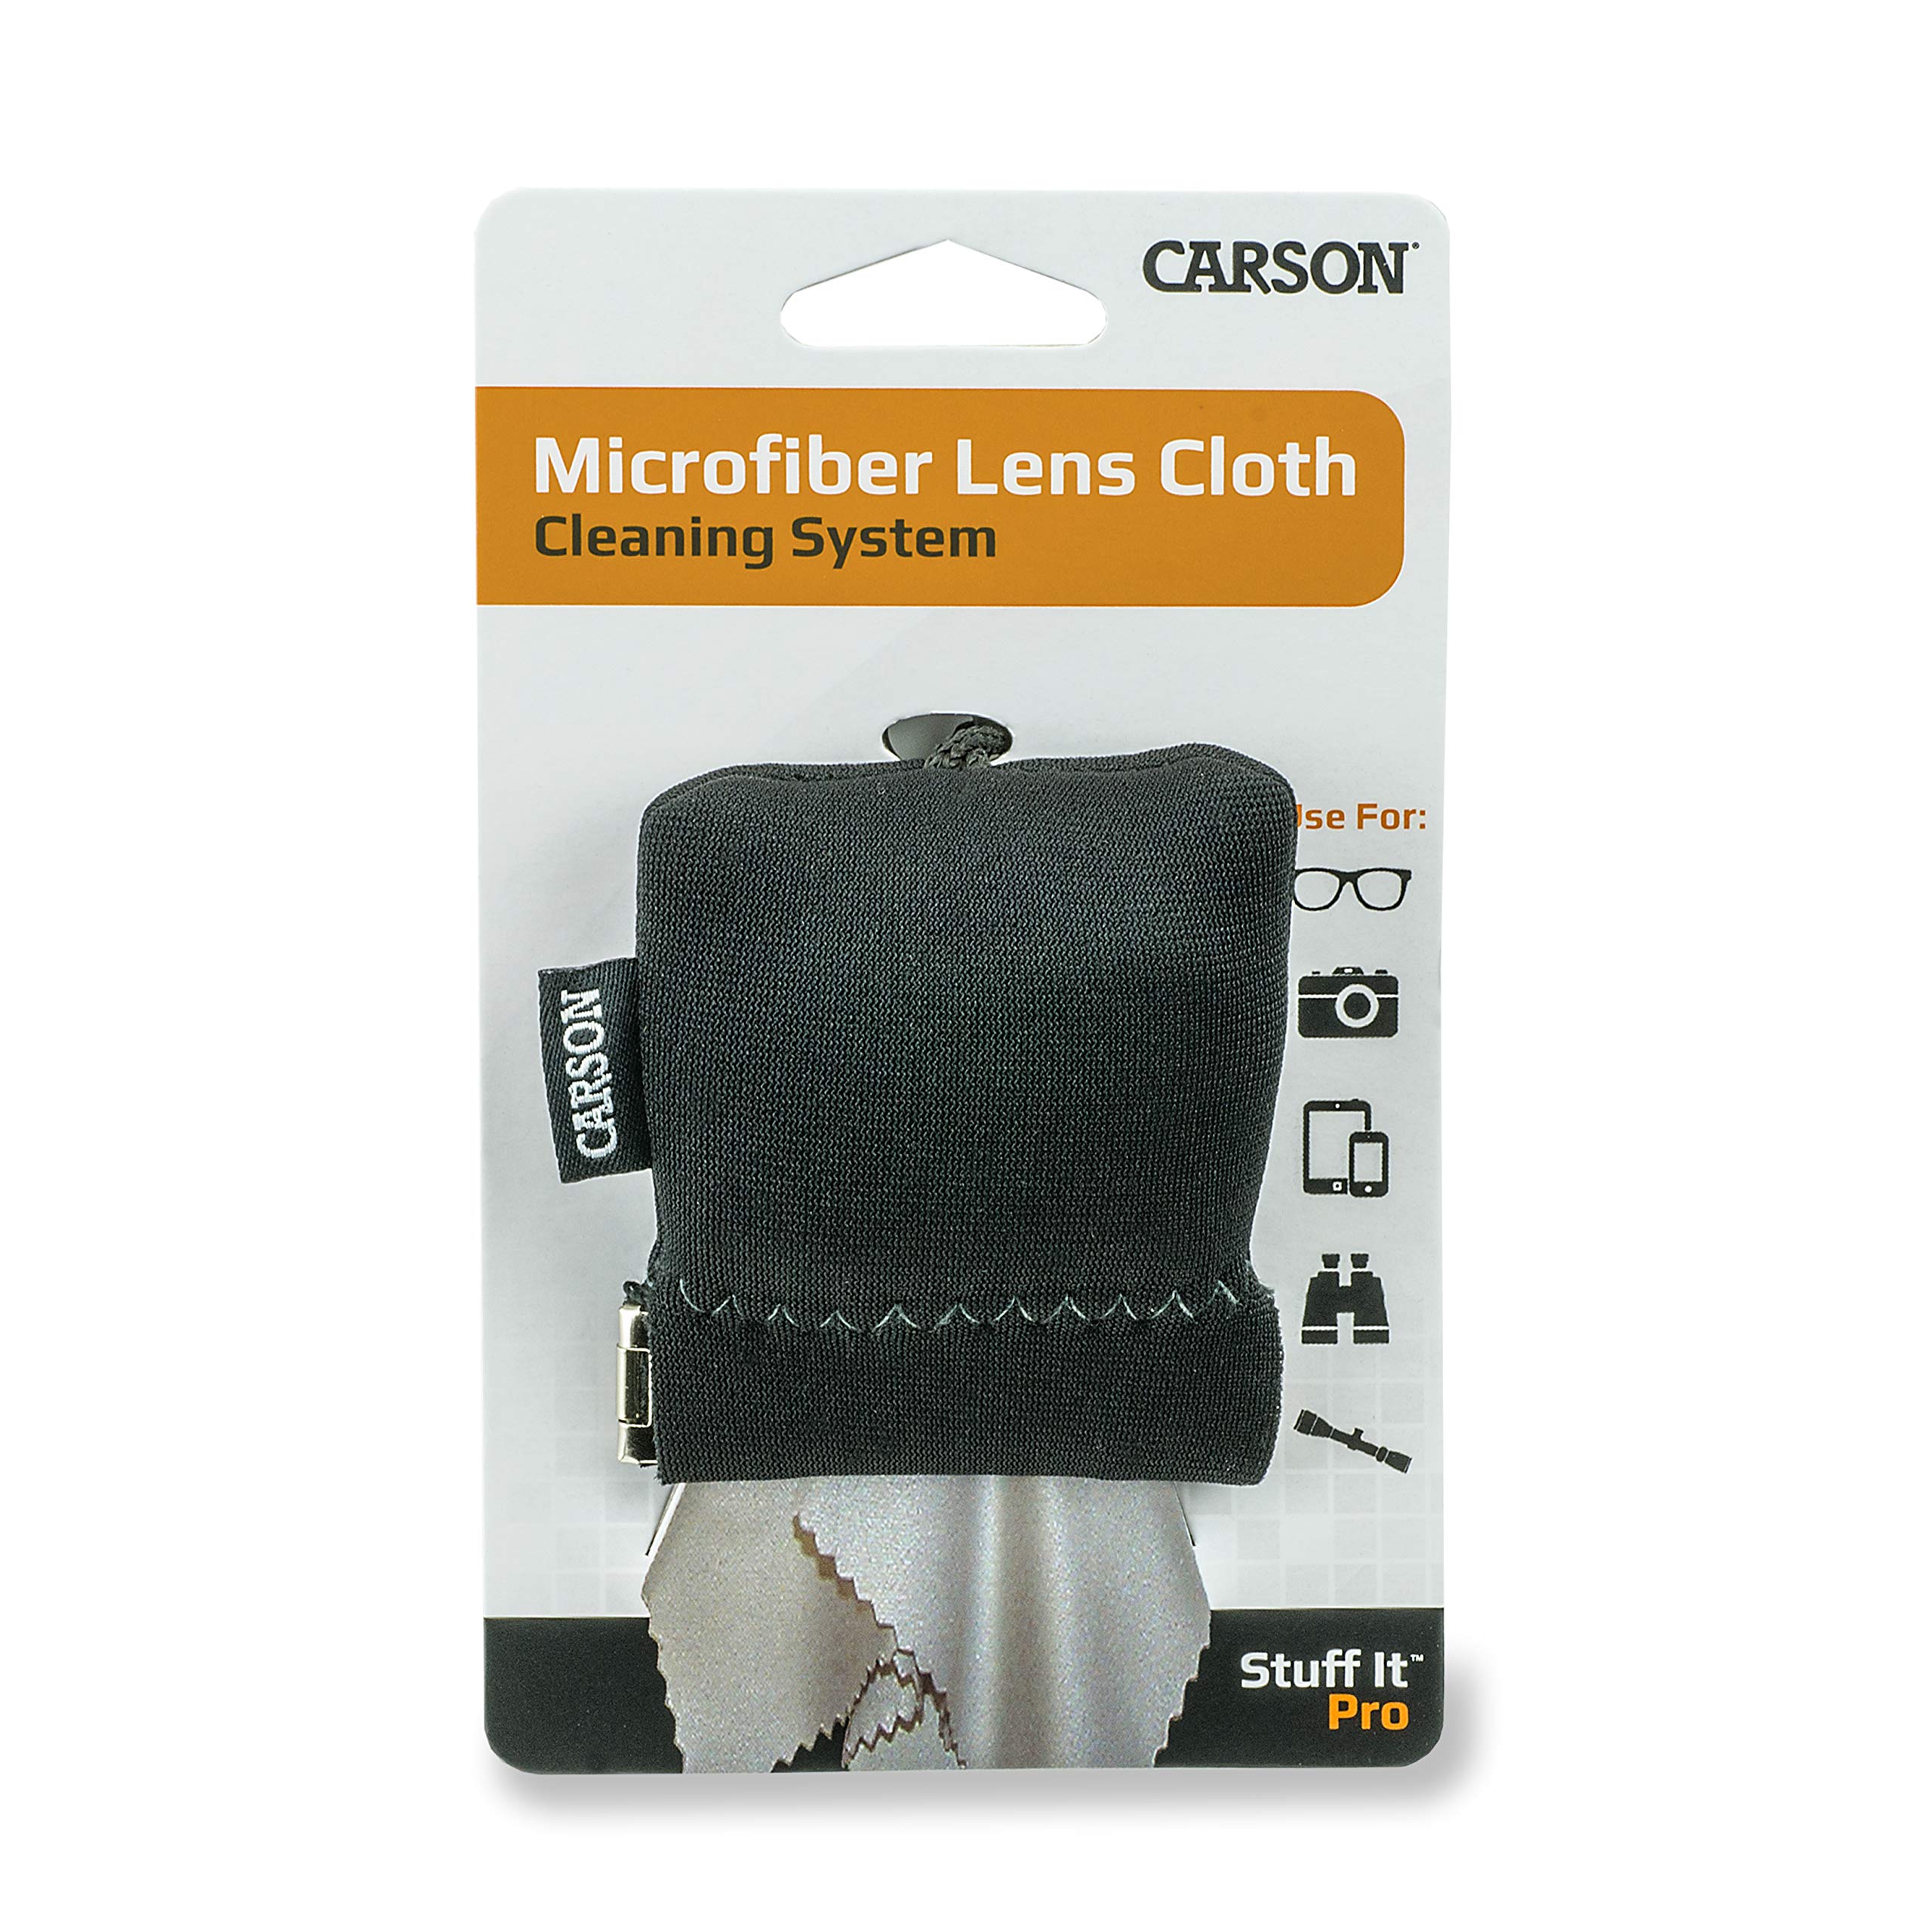 Carson Stuff-It Pro Microfiber Lens Cloth Cleaning System, Black (SN-80BKAM), Pro (Larger Version)